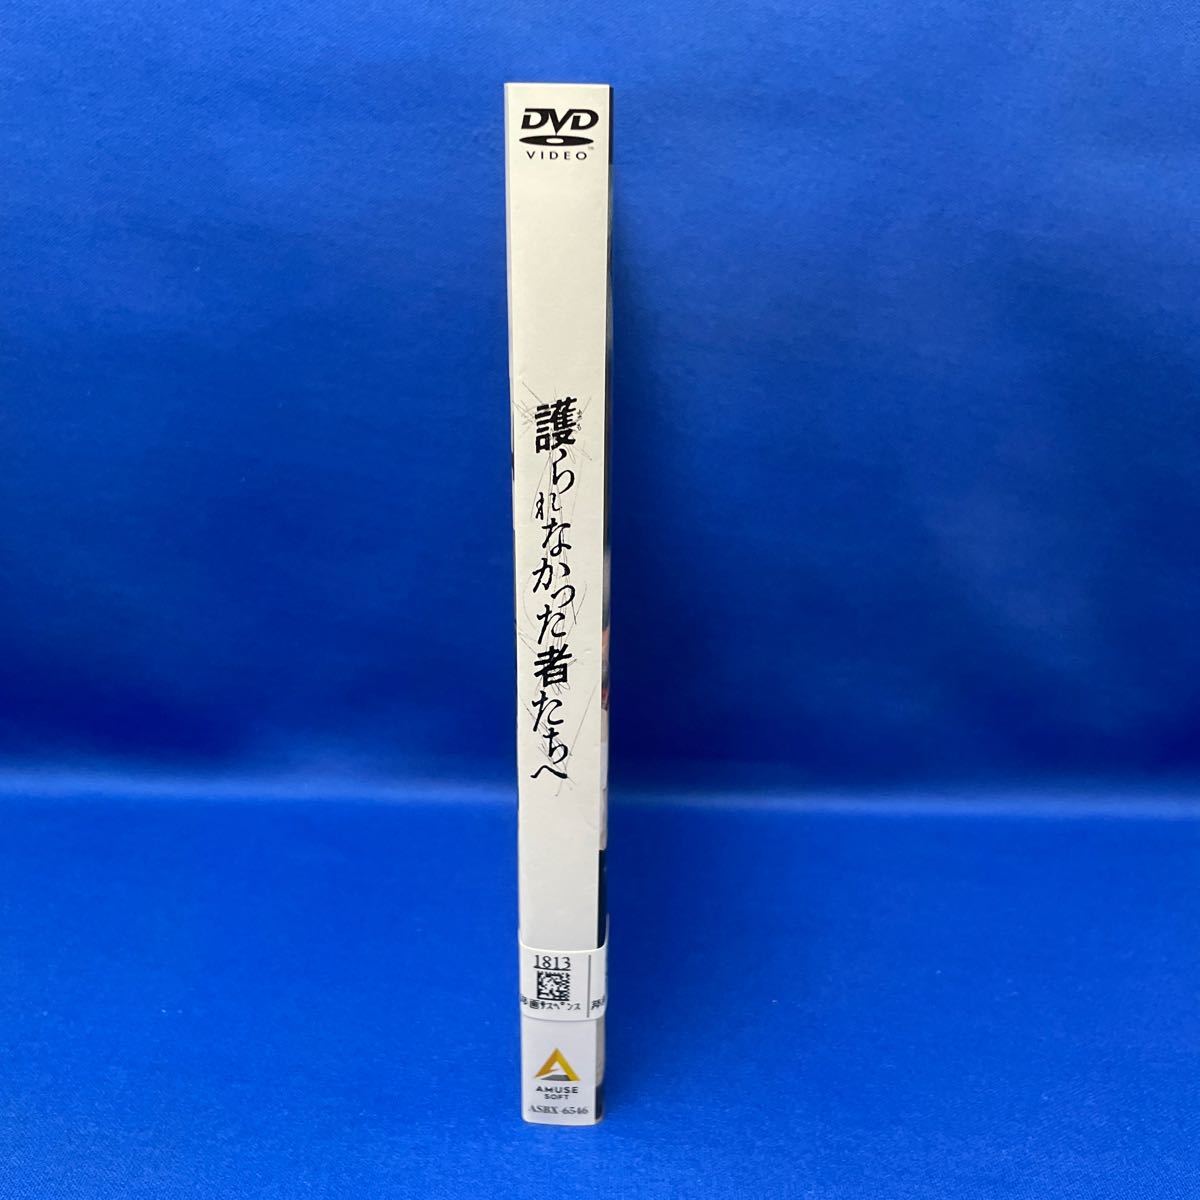 【DVD】護られなかった者たちへ / 日本映画 / 佐藤健 阿部寛 / レンタル落ち_画像3